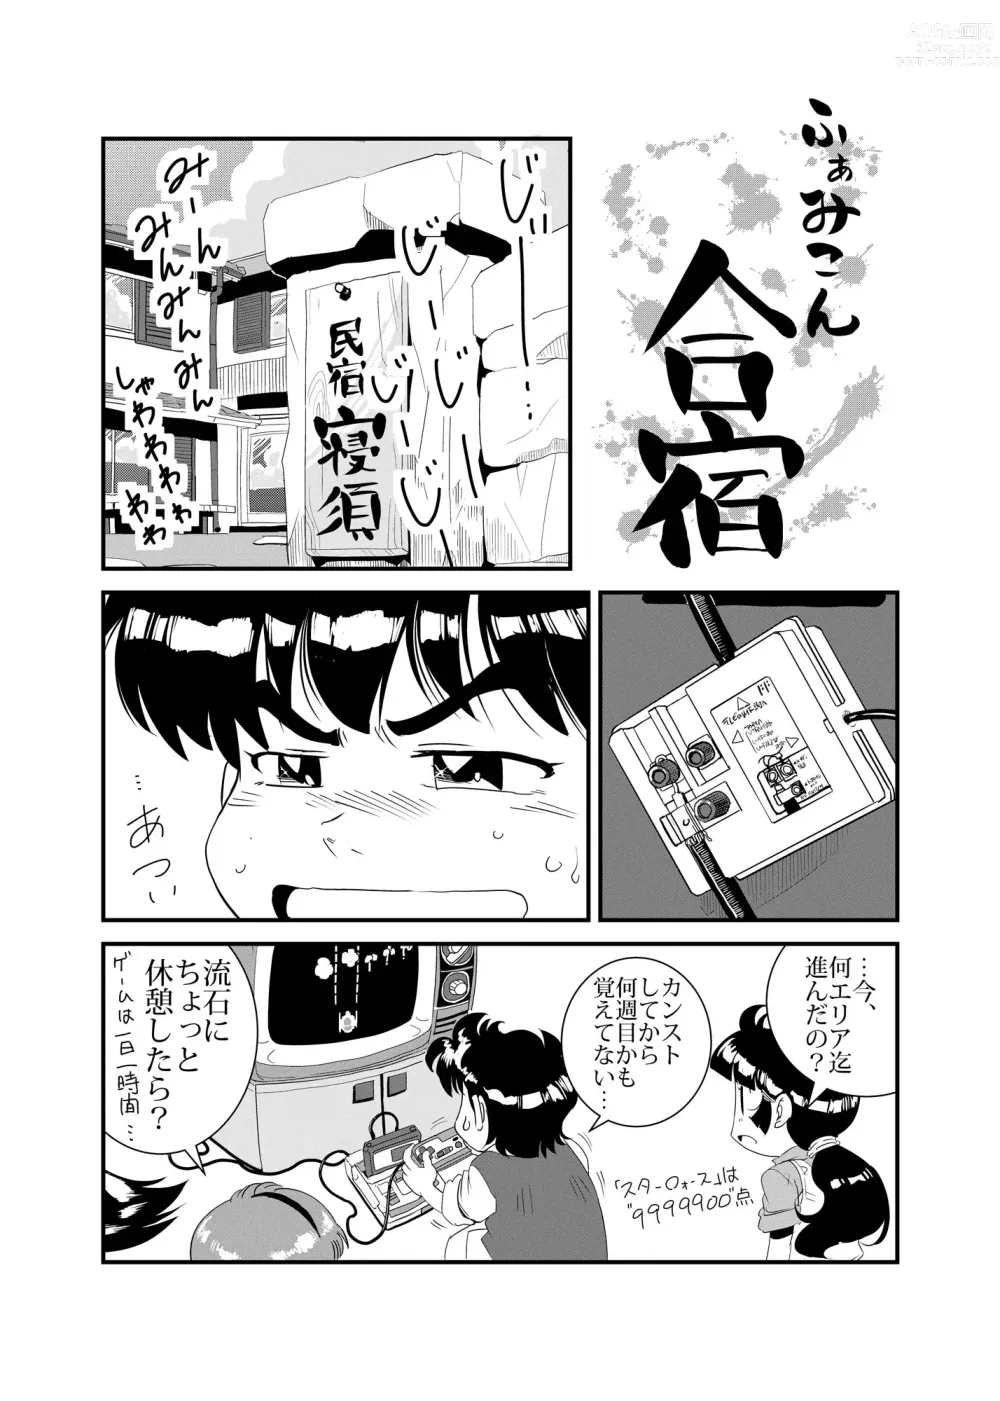 Page 1 of doujinshi Famicom no Ano Hito no Are